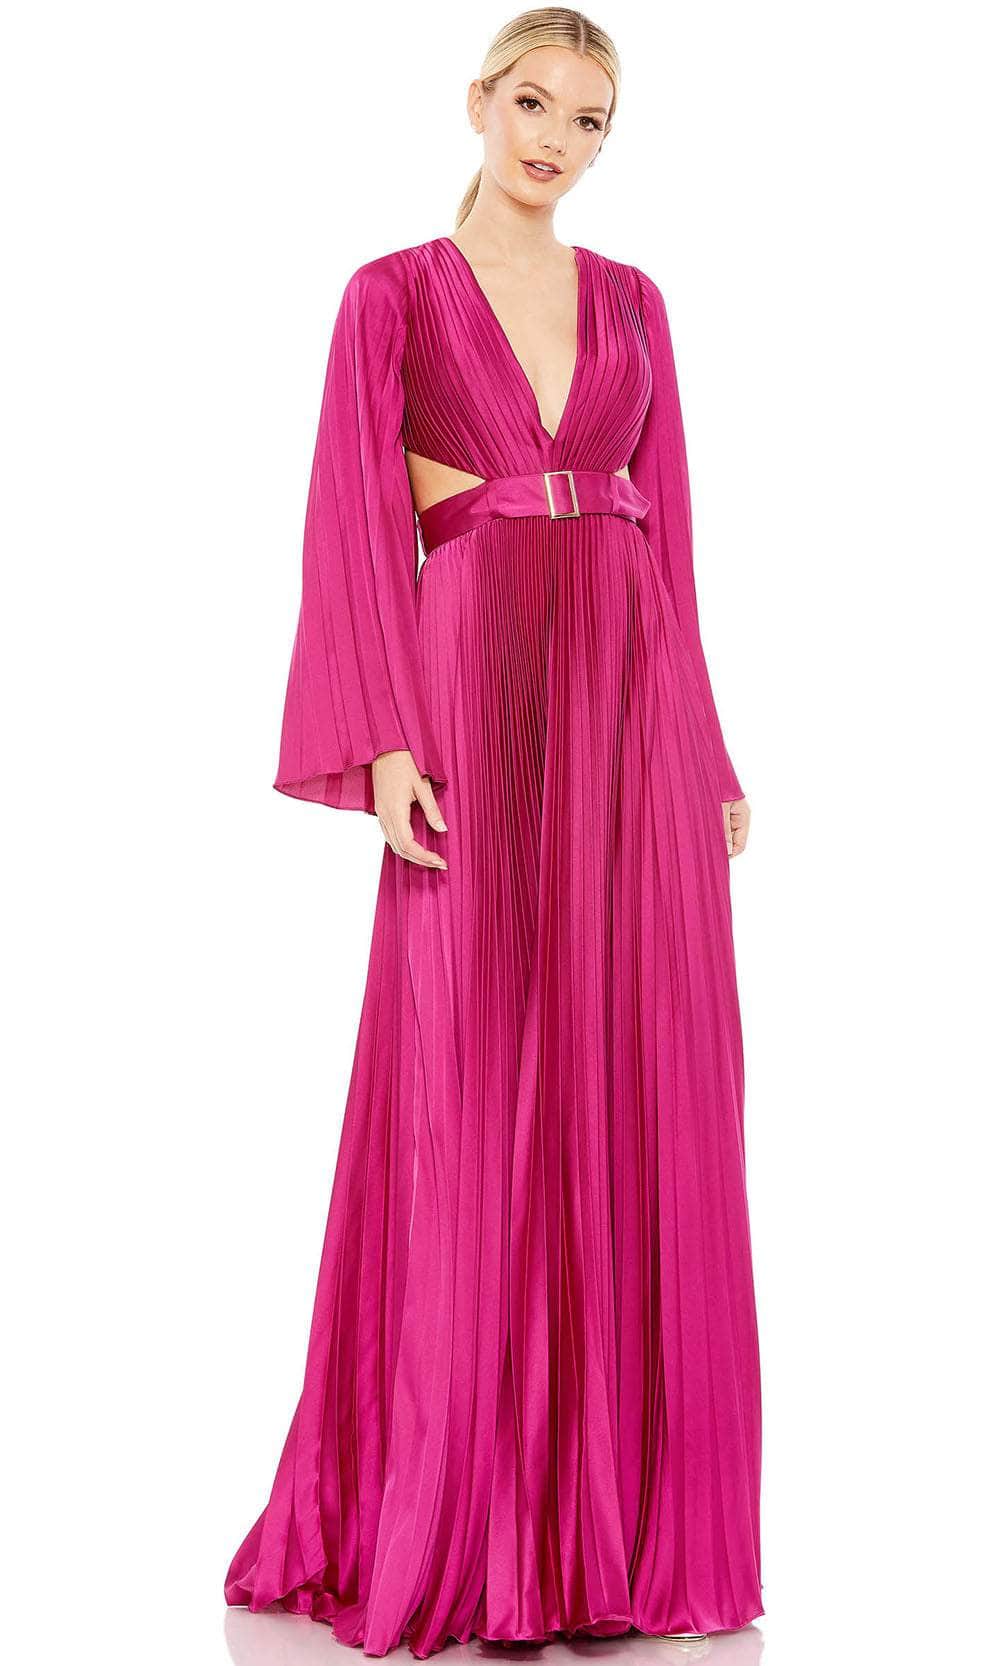 Ieena Duggal 26732 - Long Sleeve With Belt A-Line Dress Special Occasion Dress 0 / Fuchsia